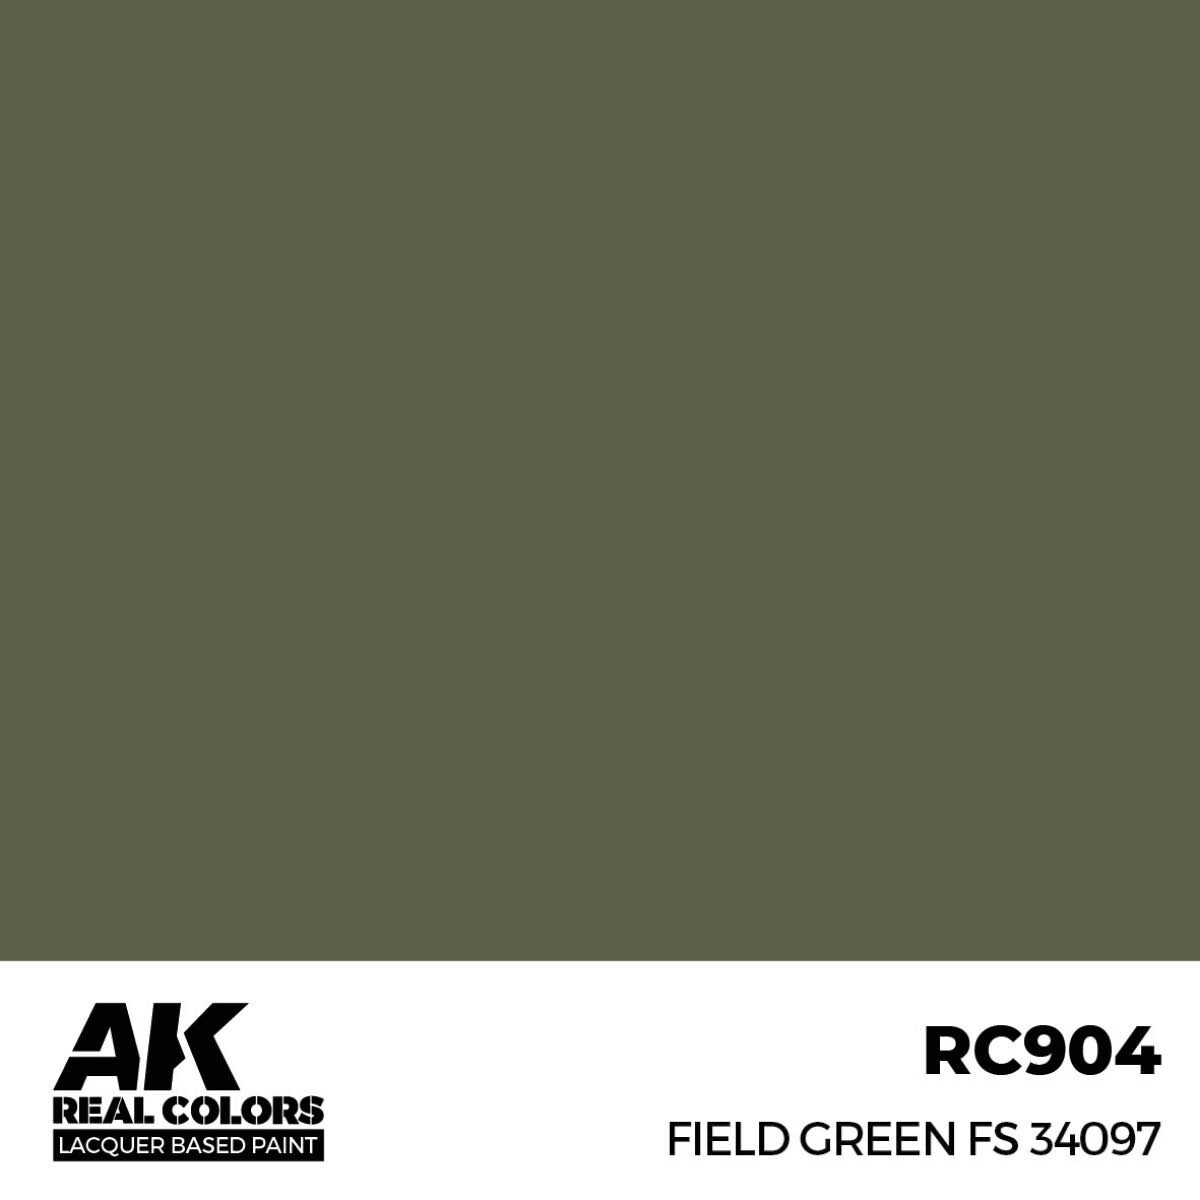 AK RC904 Real Colors Field Green FS 34097 17 ml.